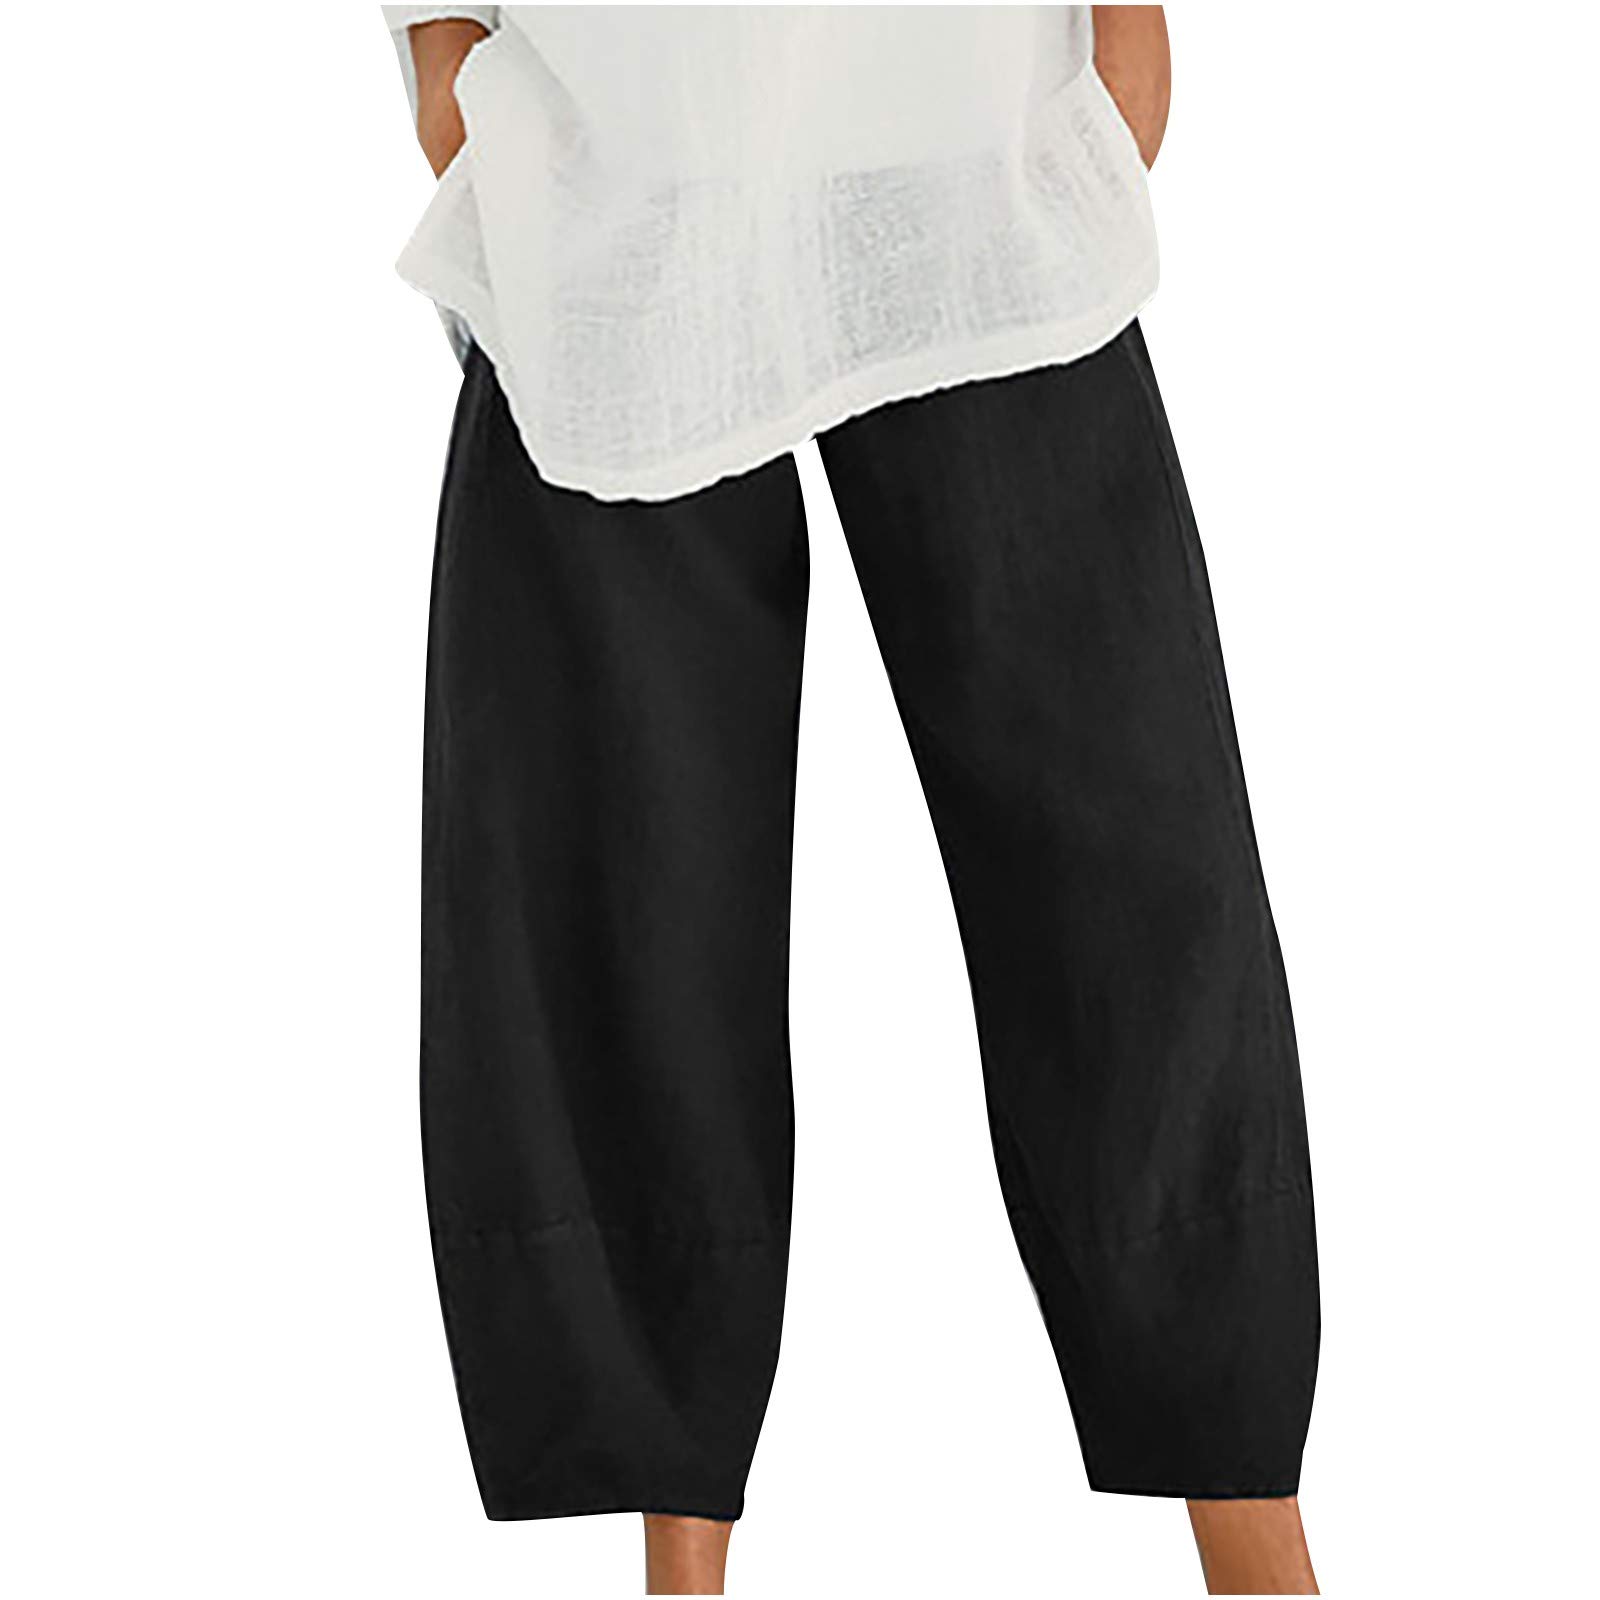 Gamivast Capri Pants for Women Linen Casual Summer Capris Loose